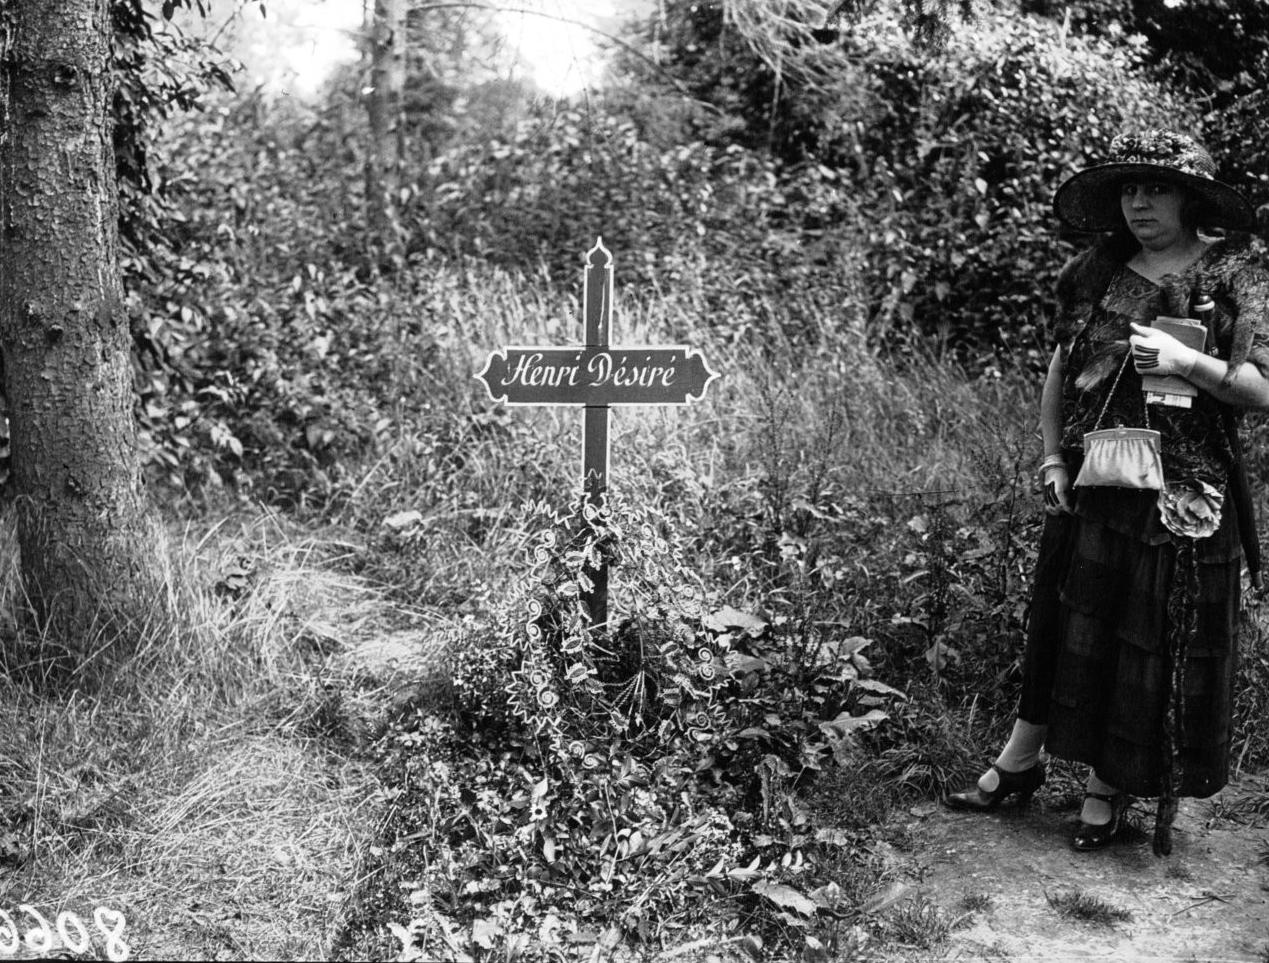 La tombe de Landru au cimetière de Versailles, 1923 - source : Gallica-BnF